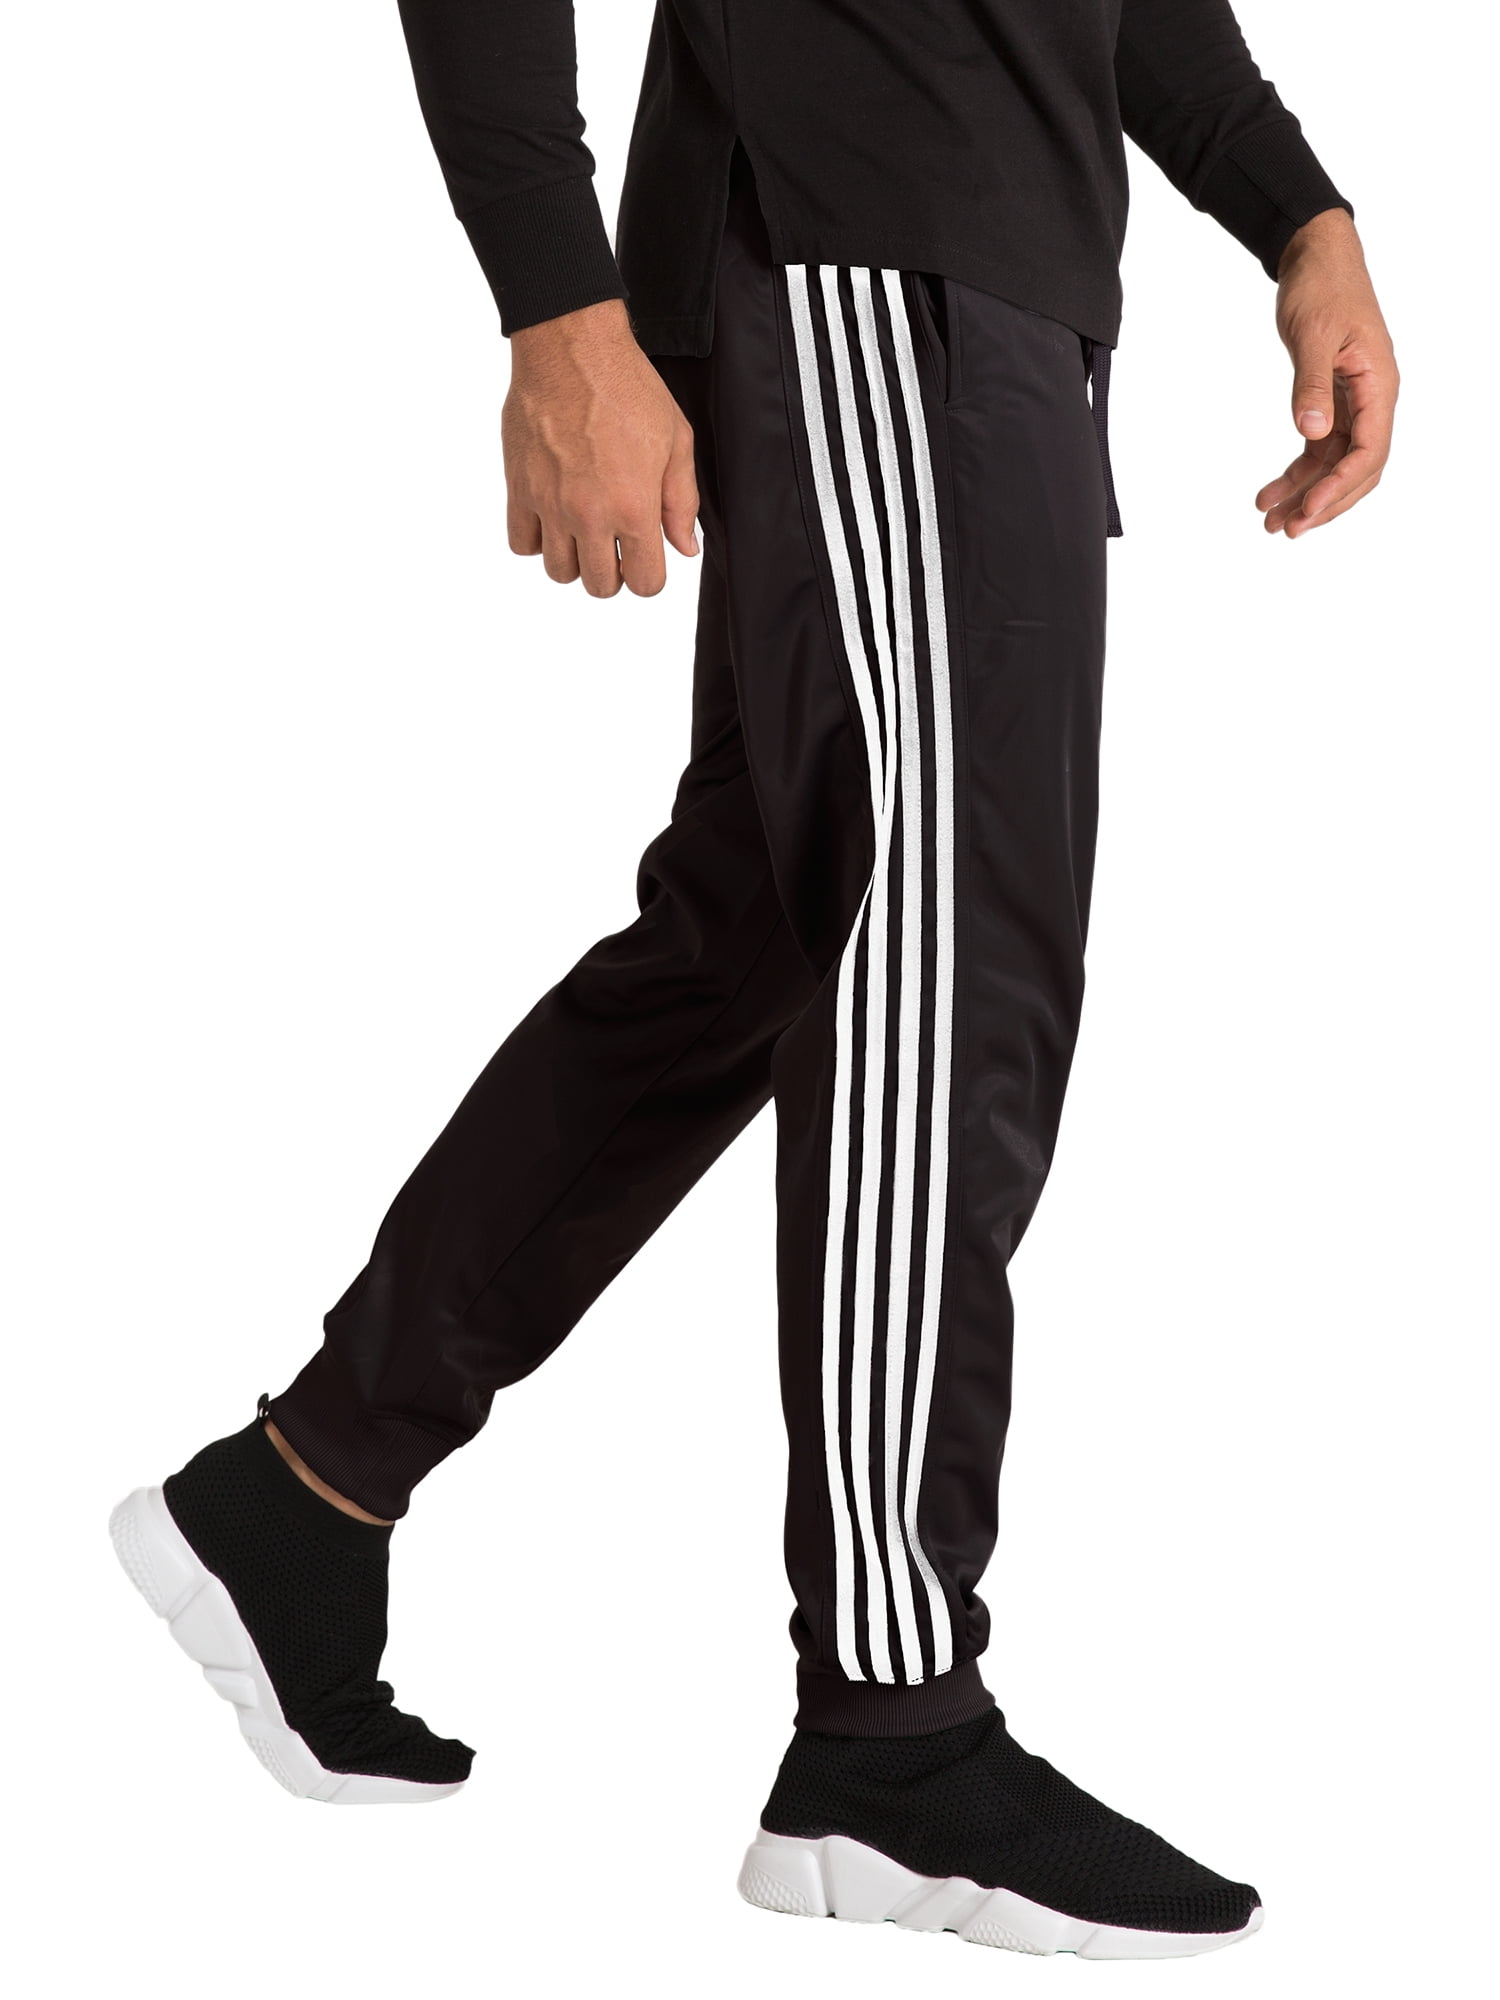 Tricot Jog Pant Mens Adults 2 Stripe Jogging Tracksuit Gym Bottoms Trousers